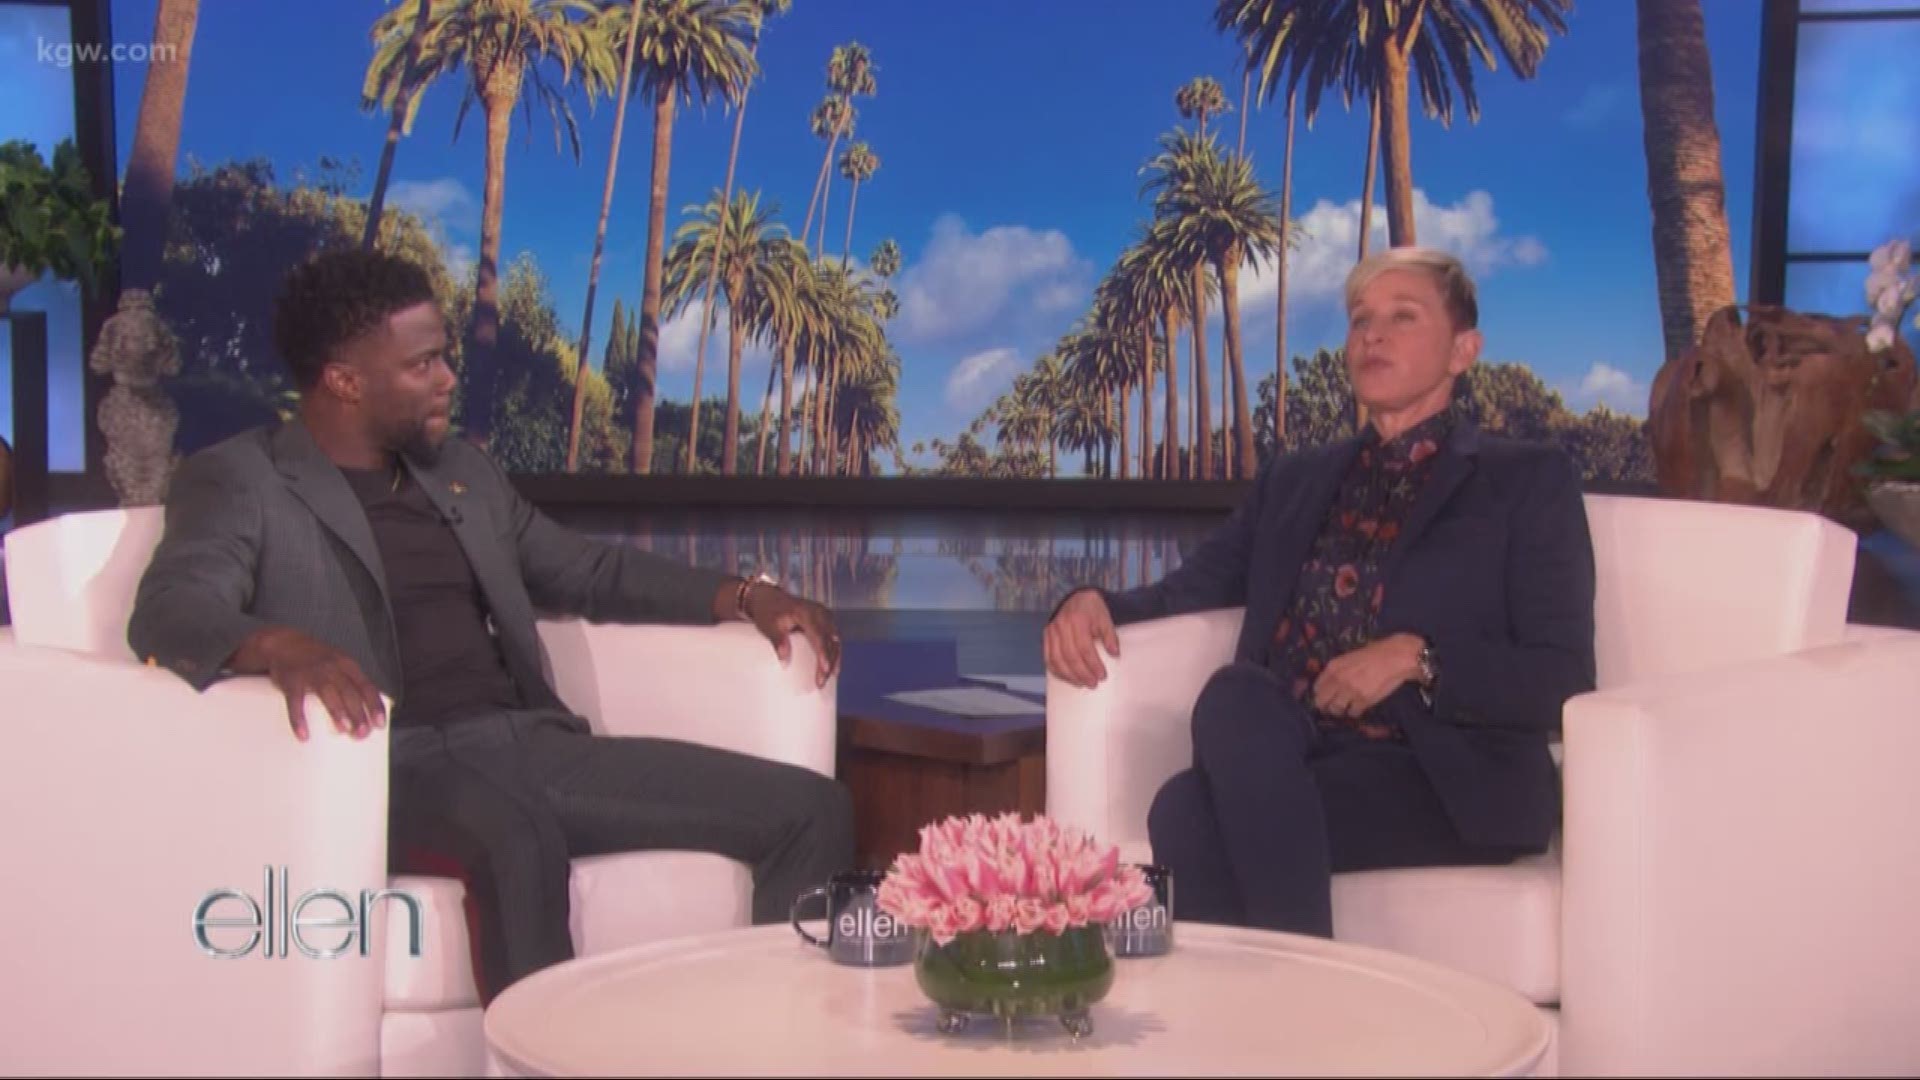 Ellen thinks a repentant Kevin Hart should host the Oscars